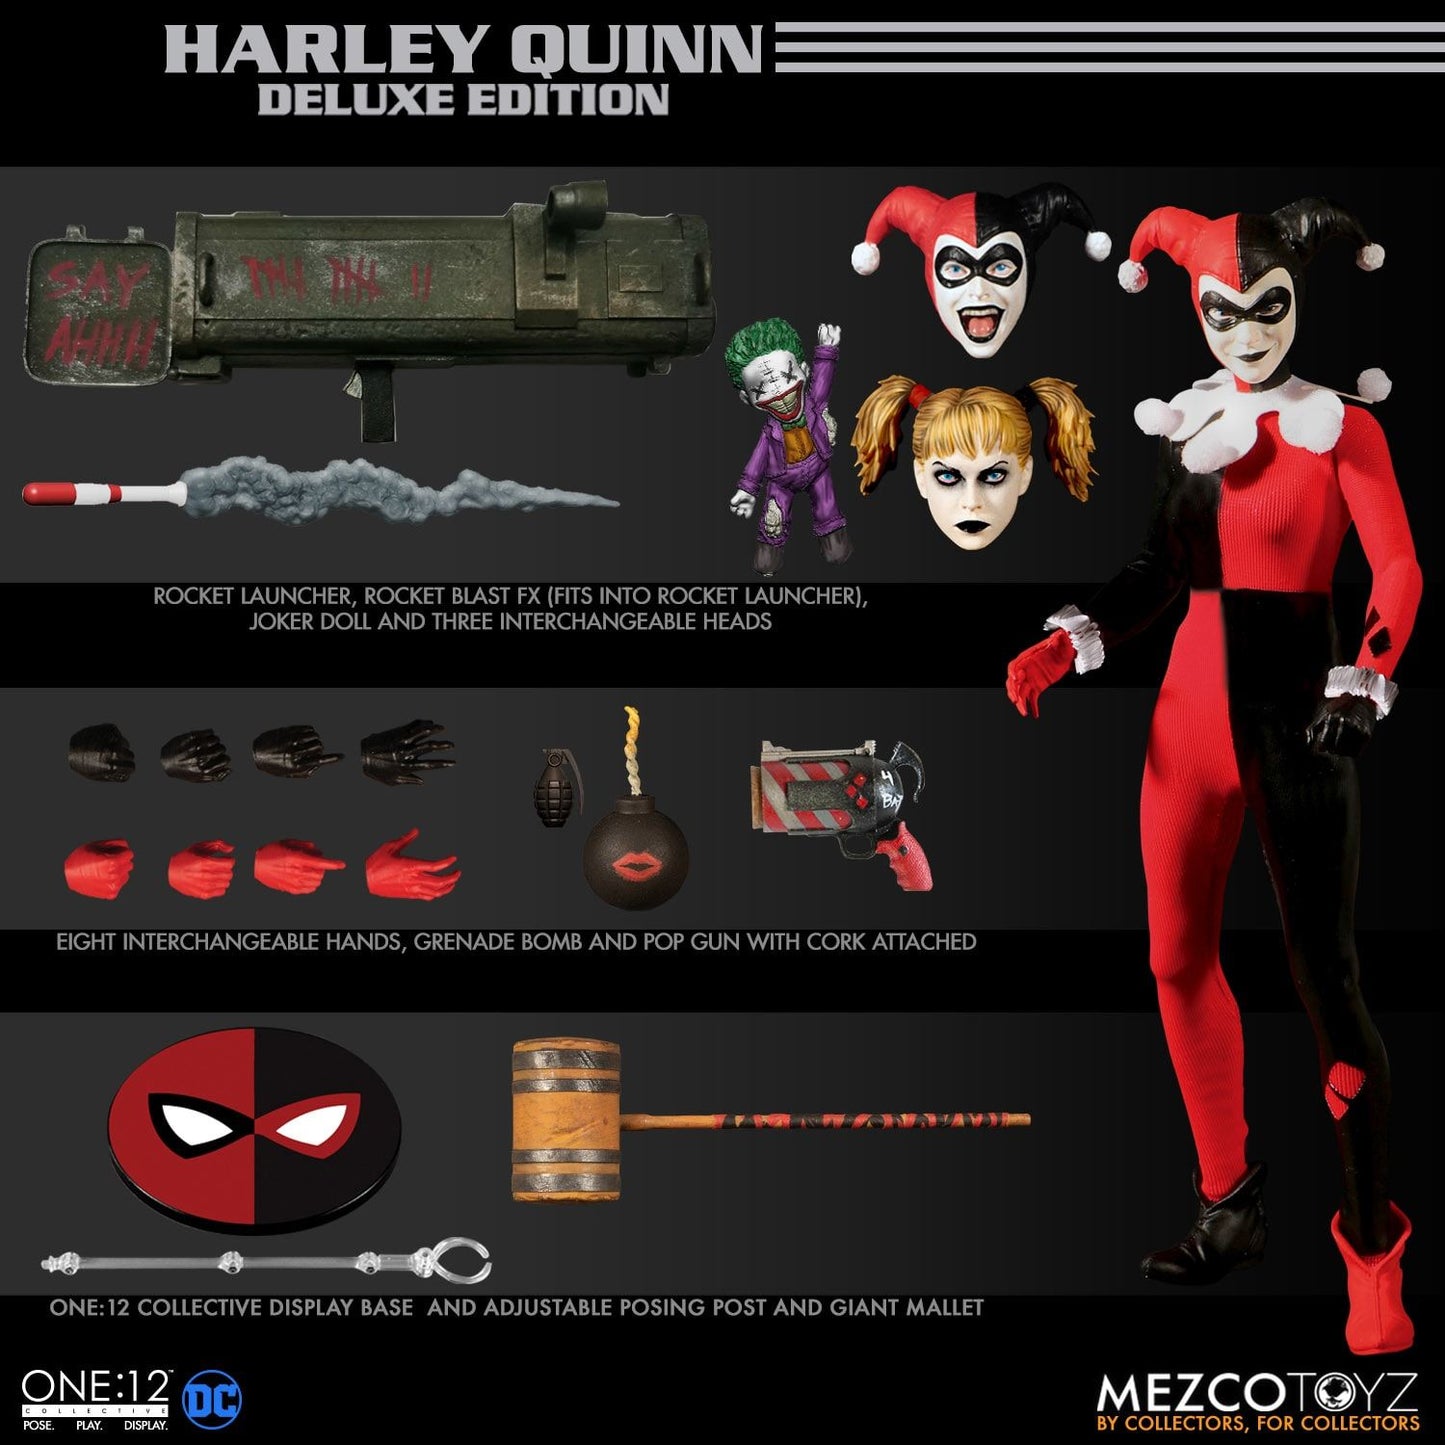 Mezco Harley Quinn Deluxe edition